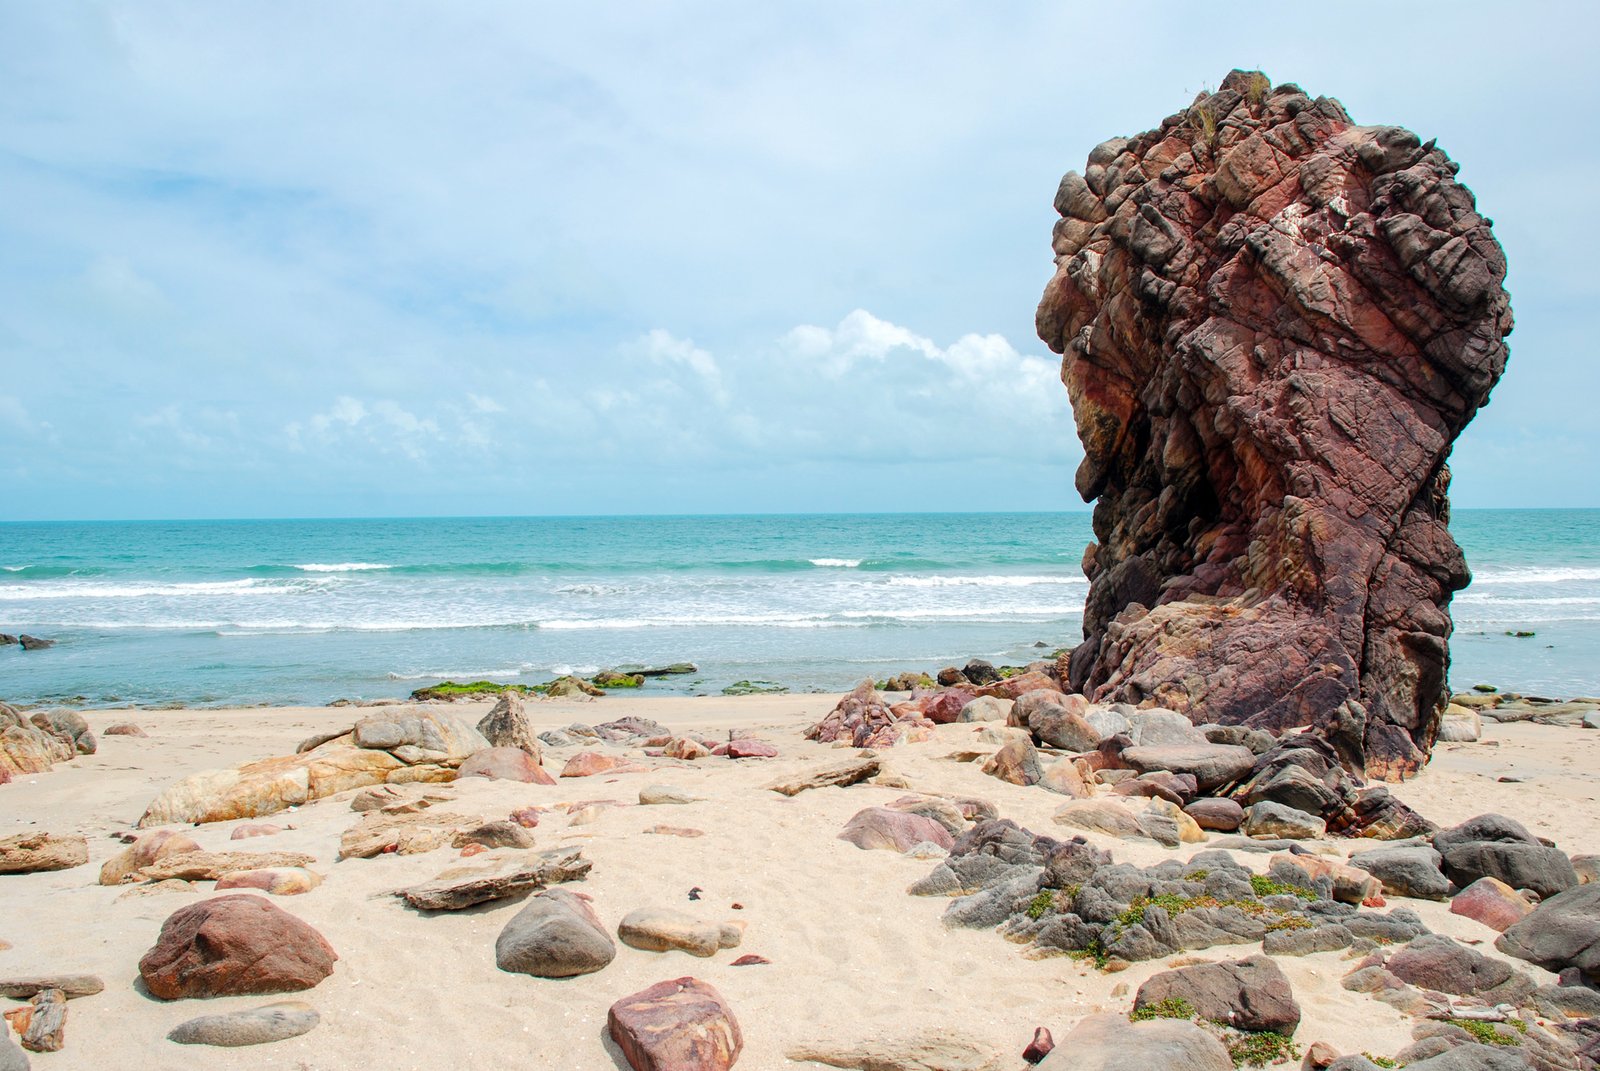 Jericoacoara is a virgin beach hidden behind the dunes of the west coast of Jijoca de Jericoacoara, Ceara, Brazil